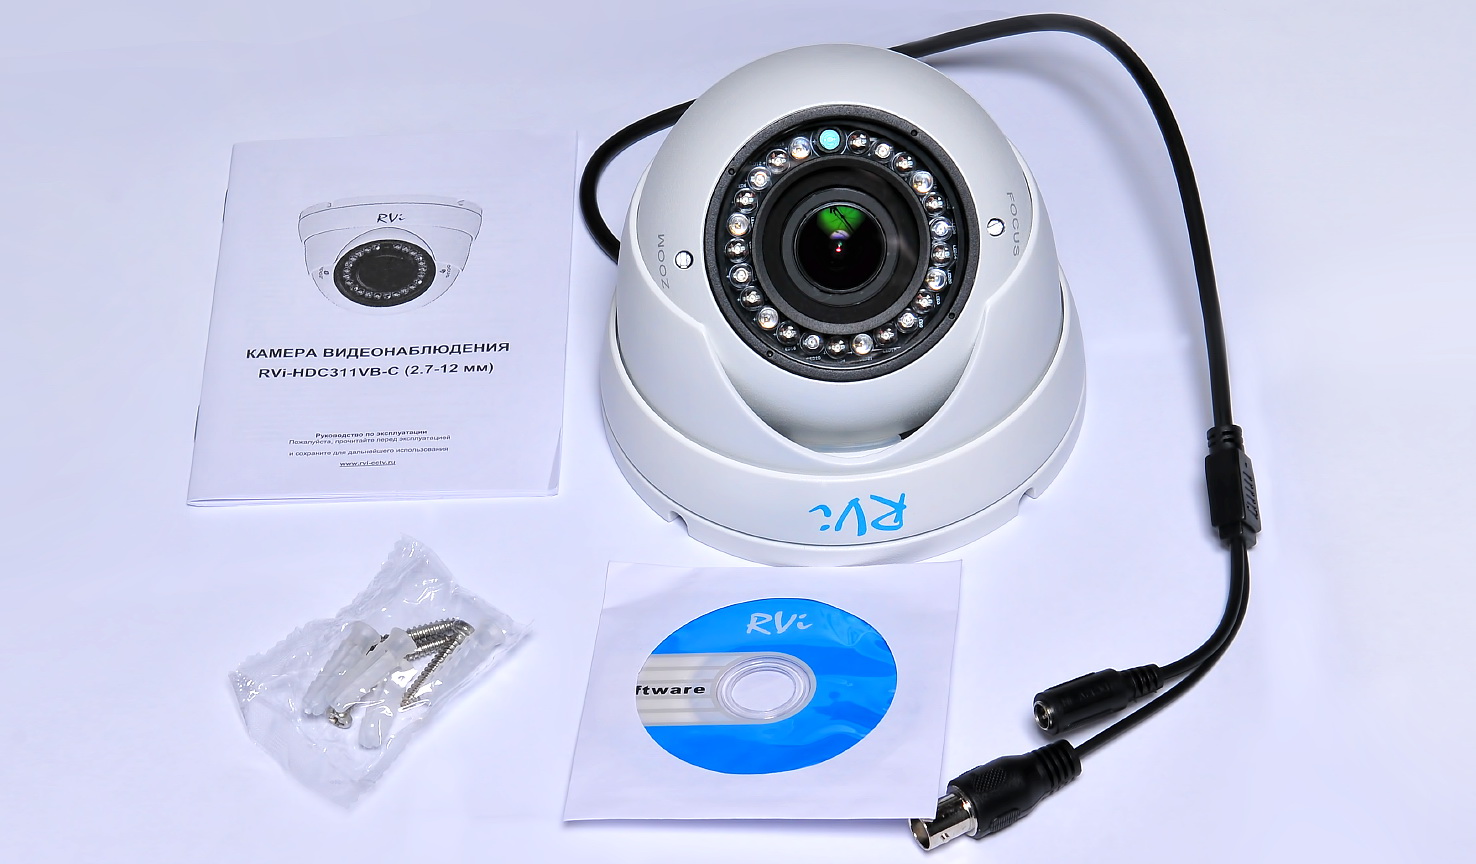 Камера 12 мм. Видеокамера RVI-hdc311-c 2.7-12. RVI-hdc311vb-c. Камера видеонаблюдения RVI-hdc311-at. Камера видеонаблюдения RVI-c311m переходник.